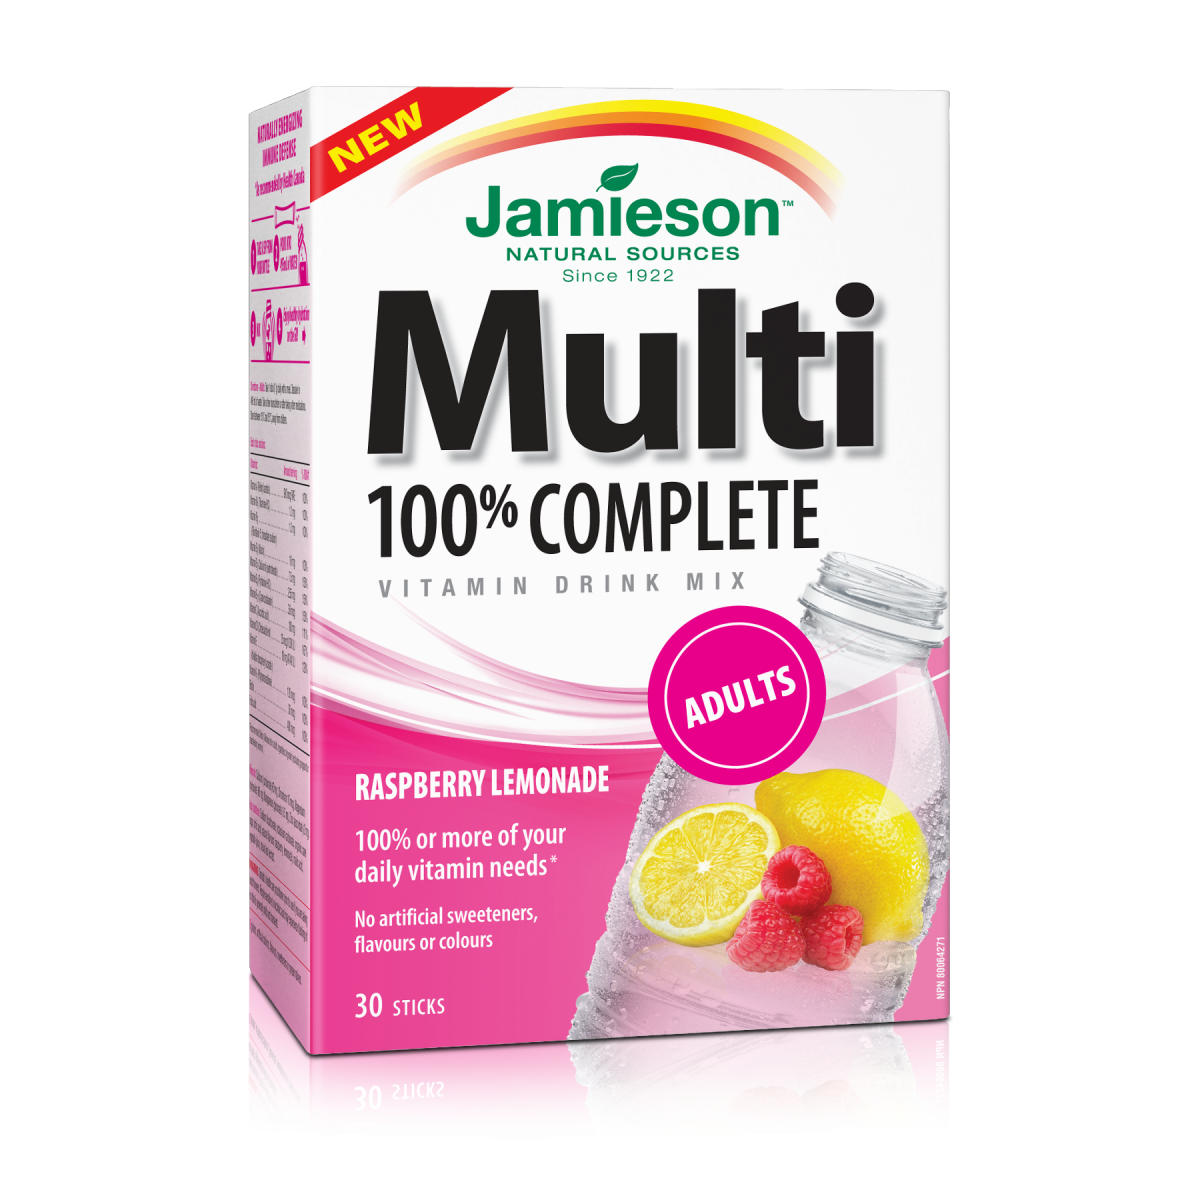 Jamieson Multi 100% Complete Vitamin Drink Mix